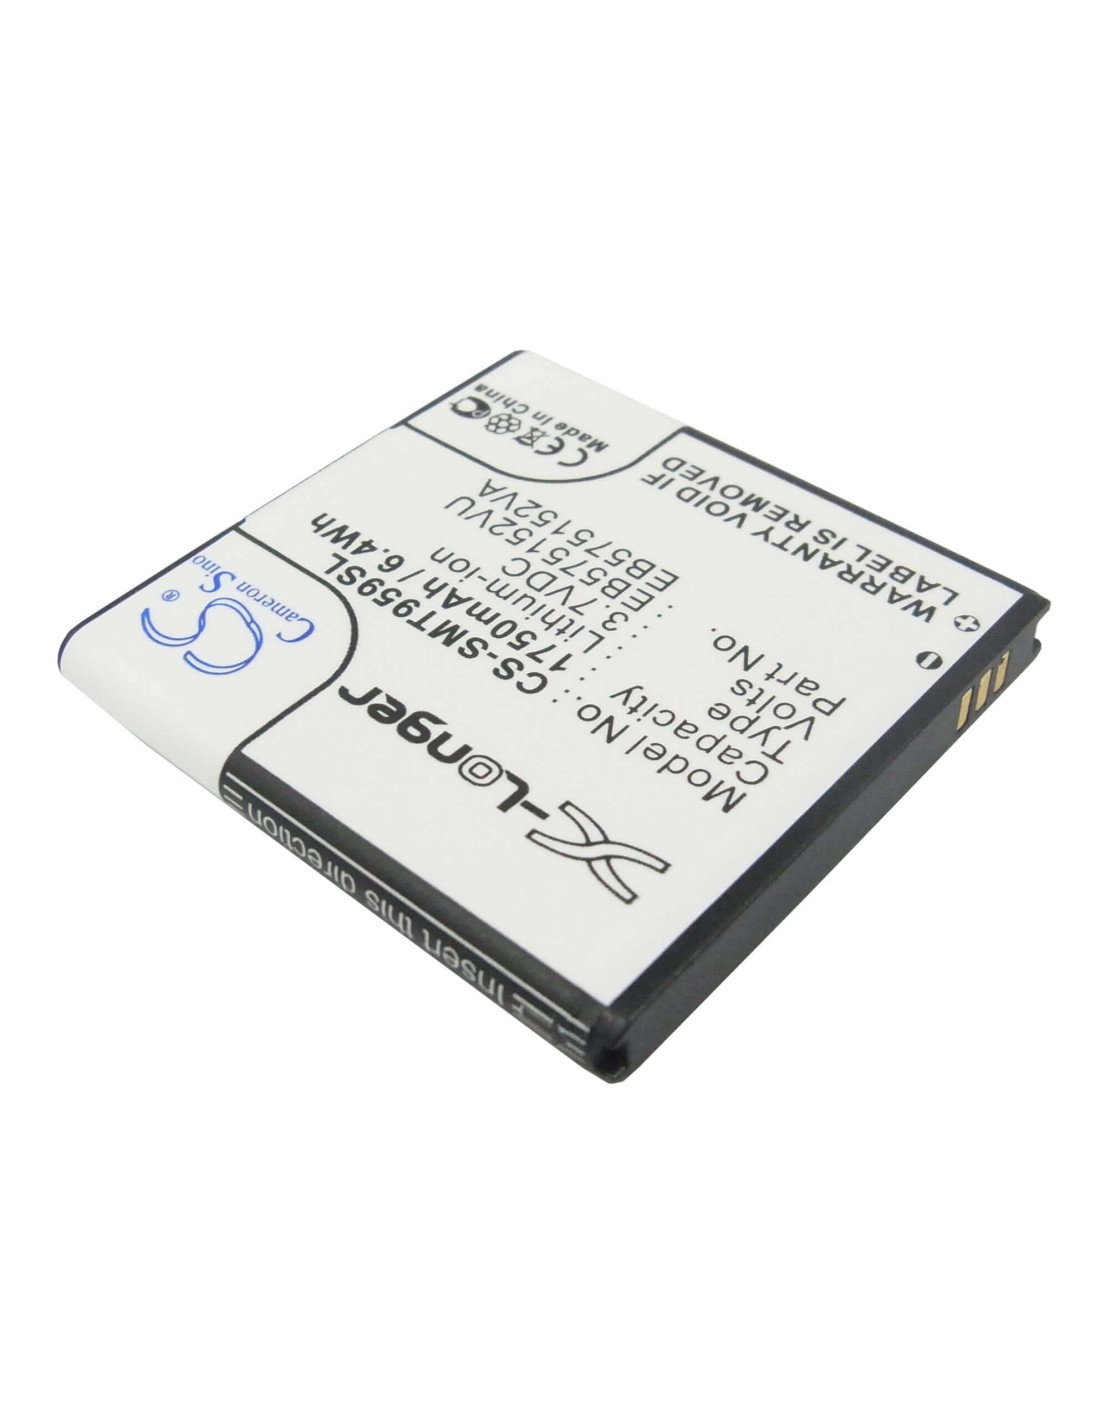 Battery for Samsung Galaxy SL, Omnia Pro 4, GT-I9010 3.7V, 1750mAh - 6.48Wh